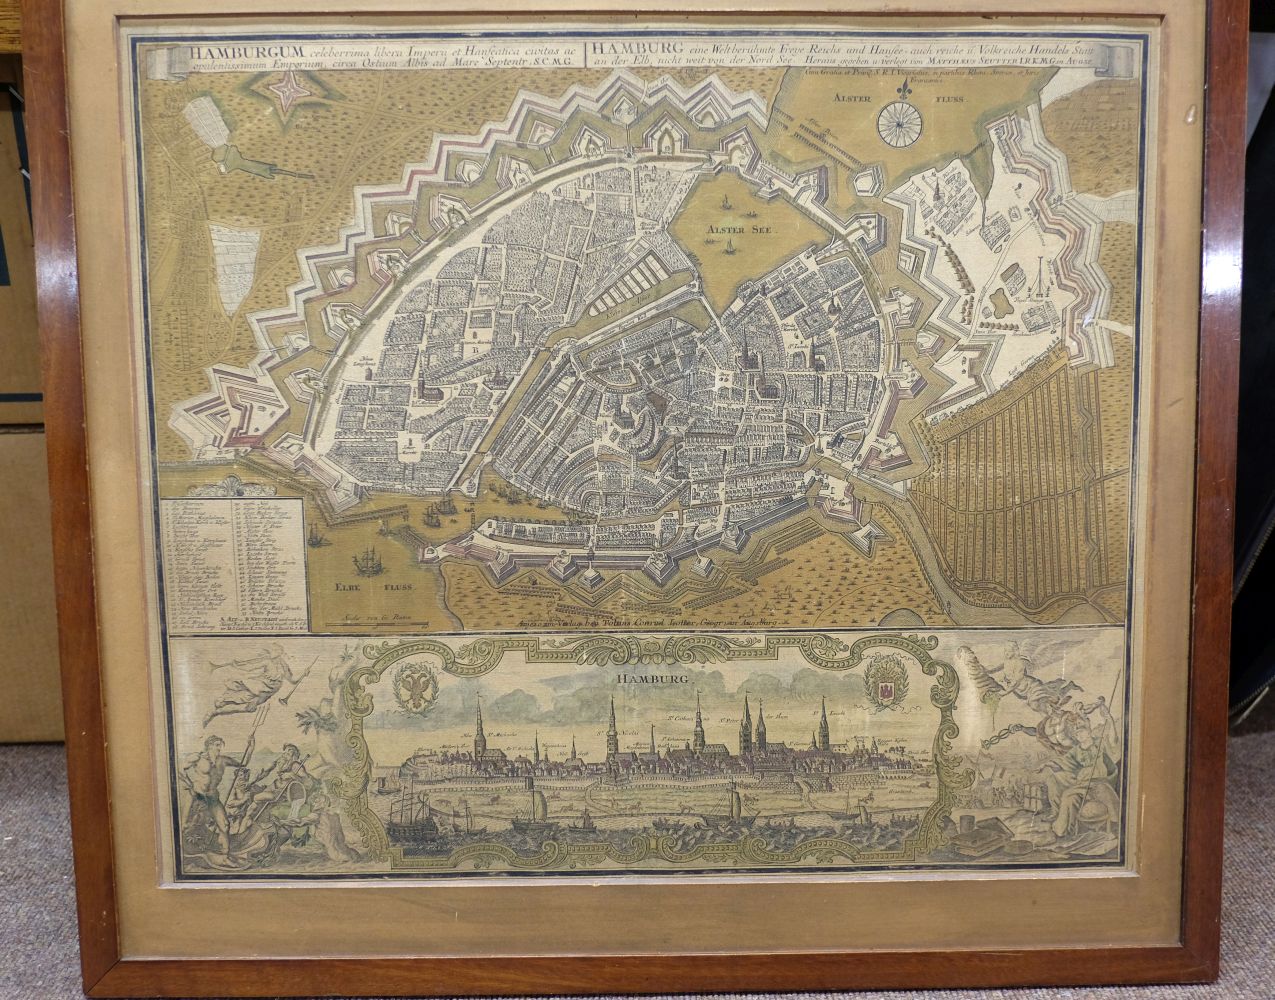 * Hamburg. Visscher (Nicholas), circa 1680